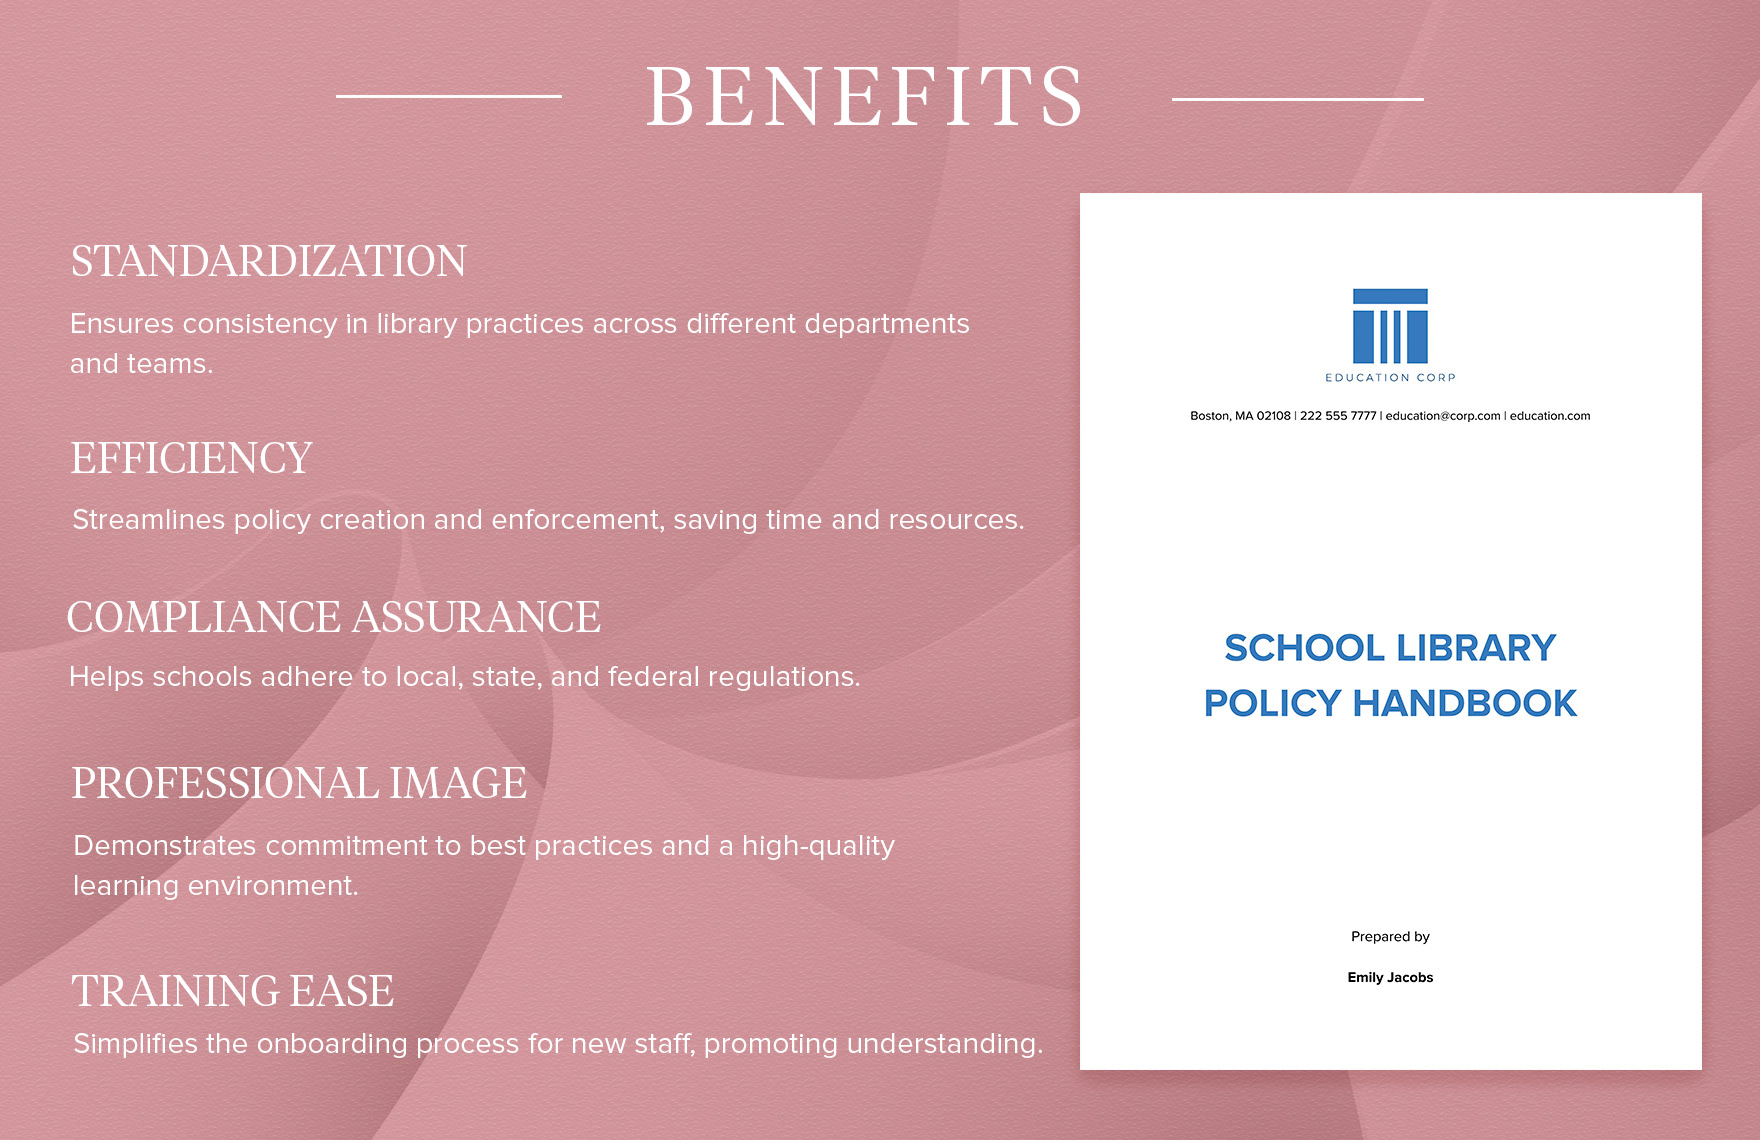 School Library Policy Handbook Template